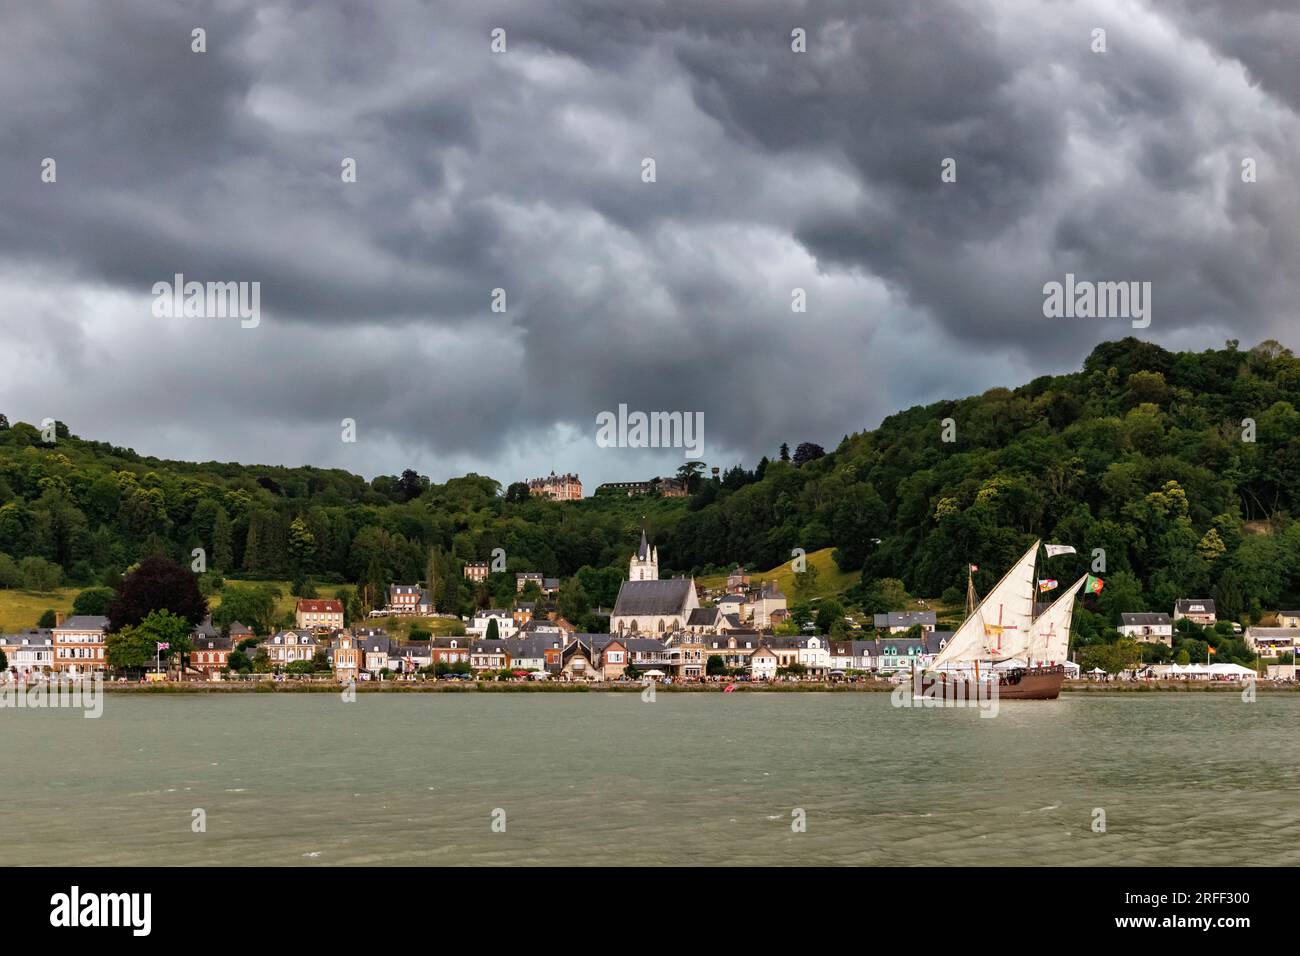 France, Seine-Maritime, Vatteville-la-Rue, Armada 2023, Grand Parade, caravel Vera Cruz sails in front of Villequier village, under a threatening stormy sky Stock Photo